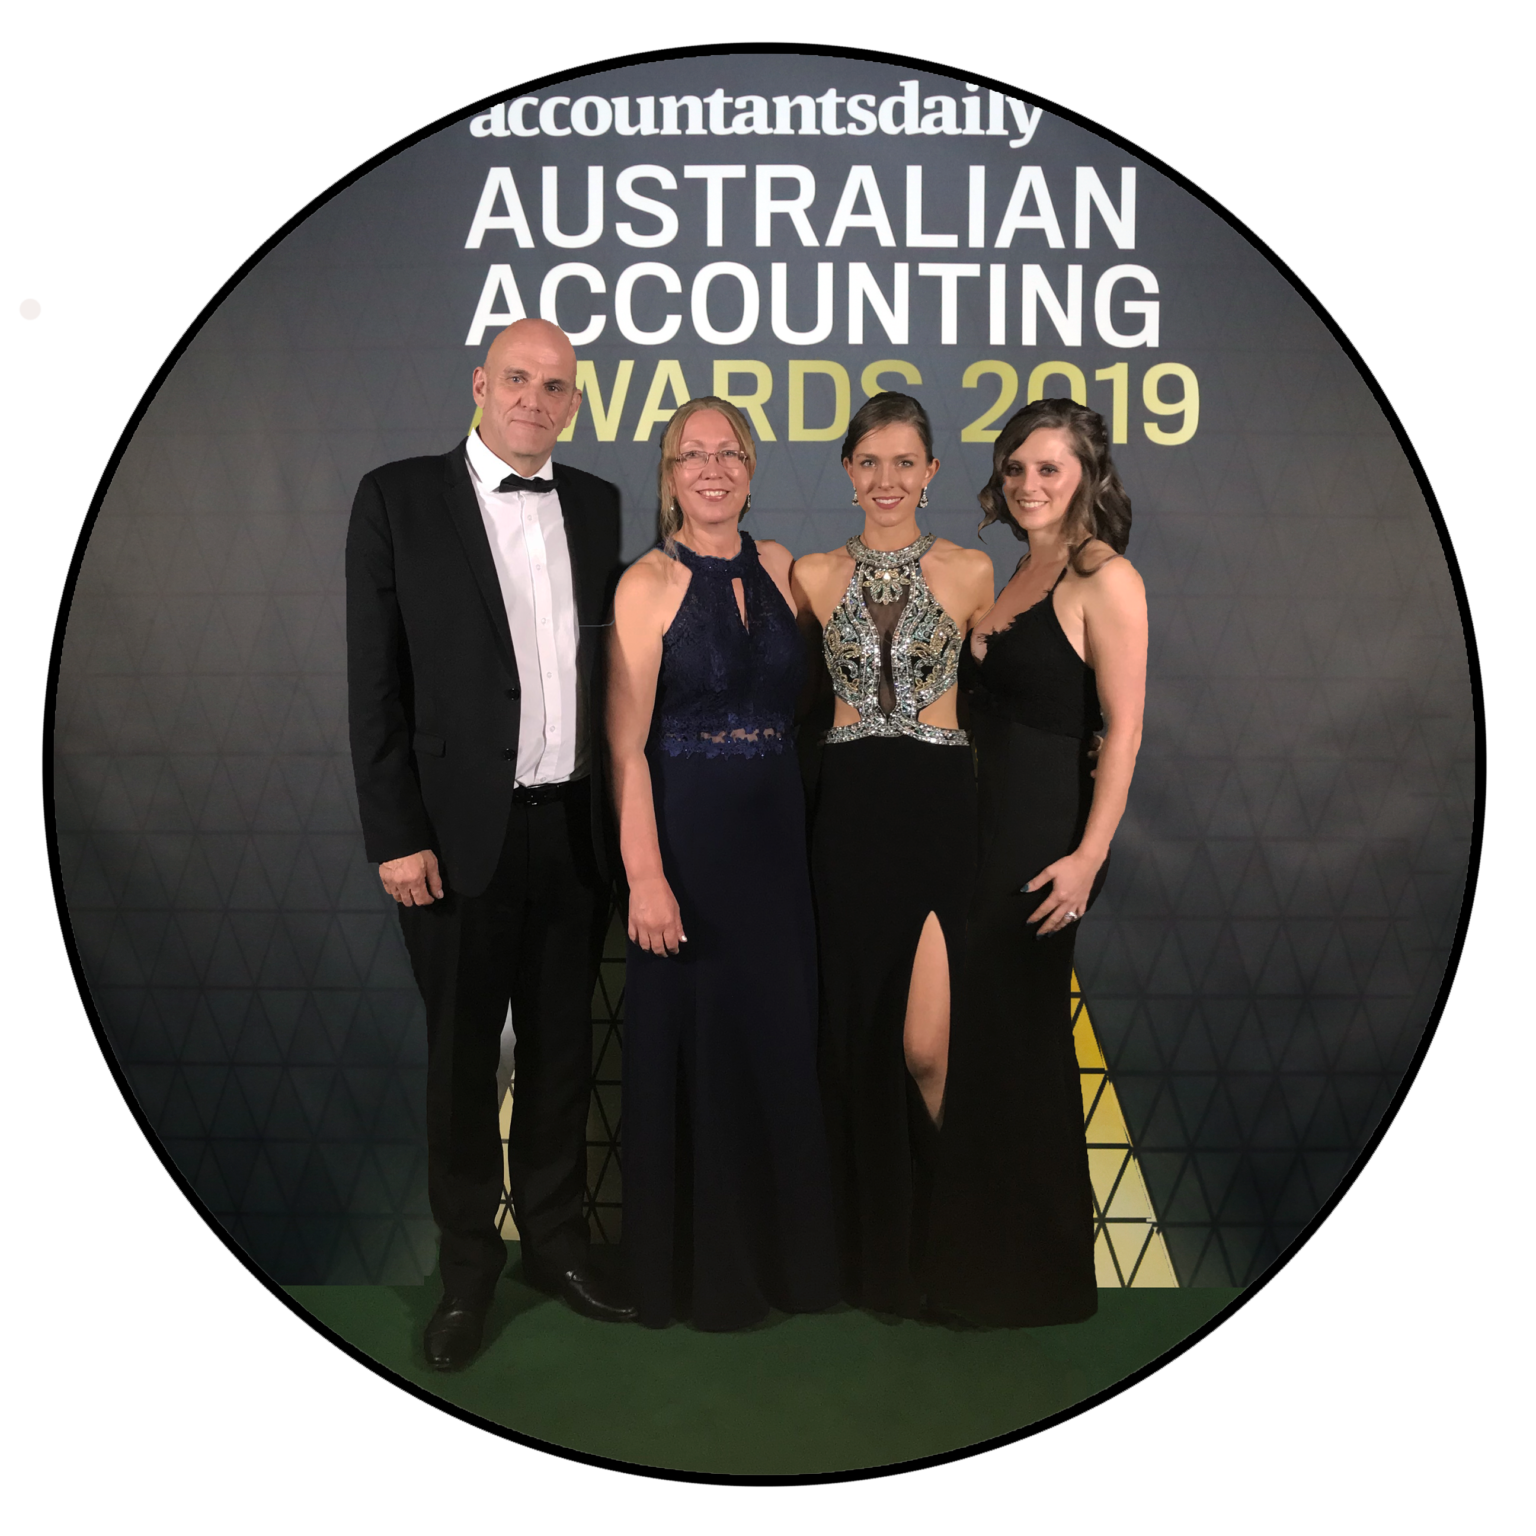 Chartered accountant jobs sydney australia